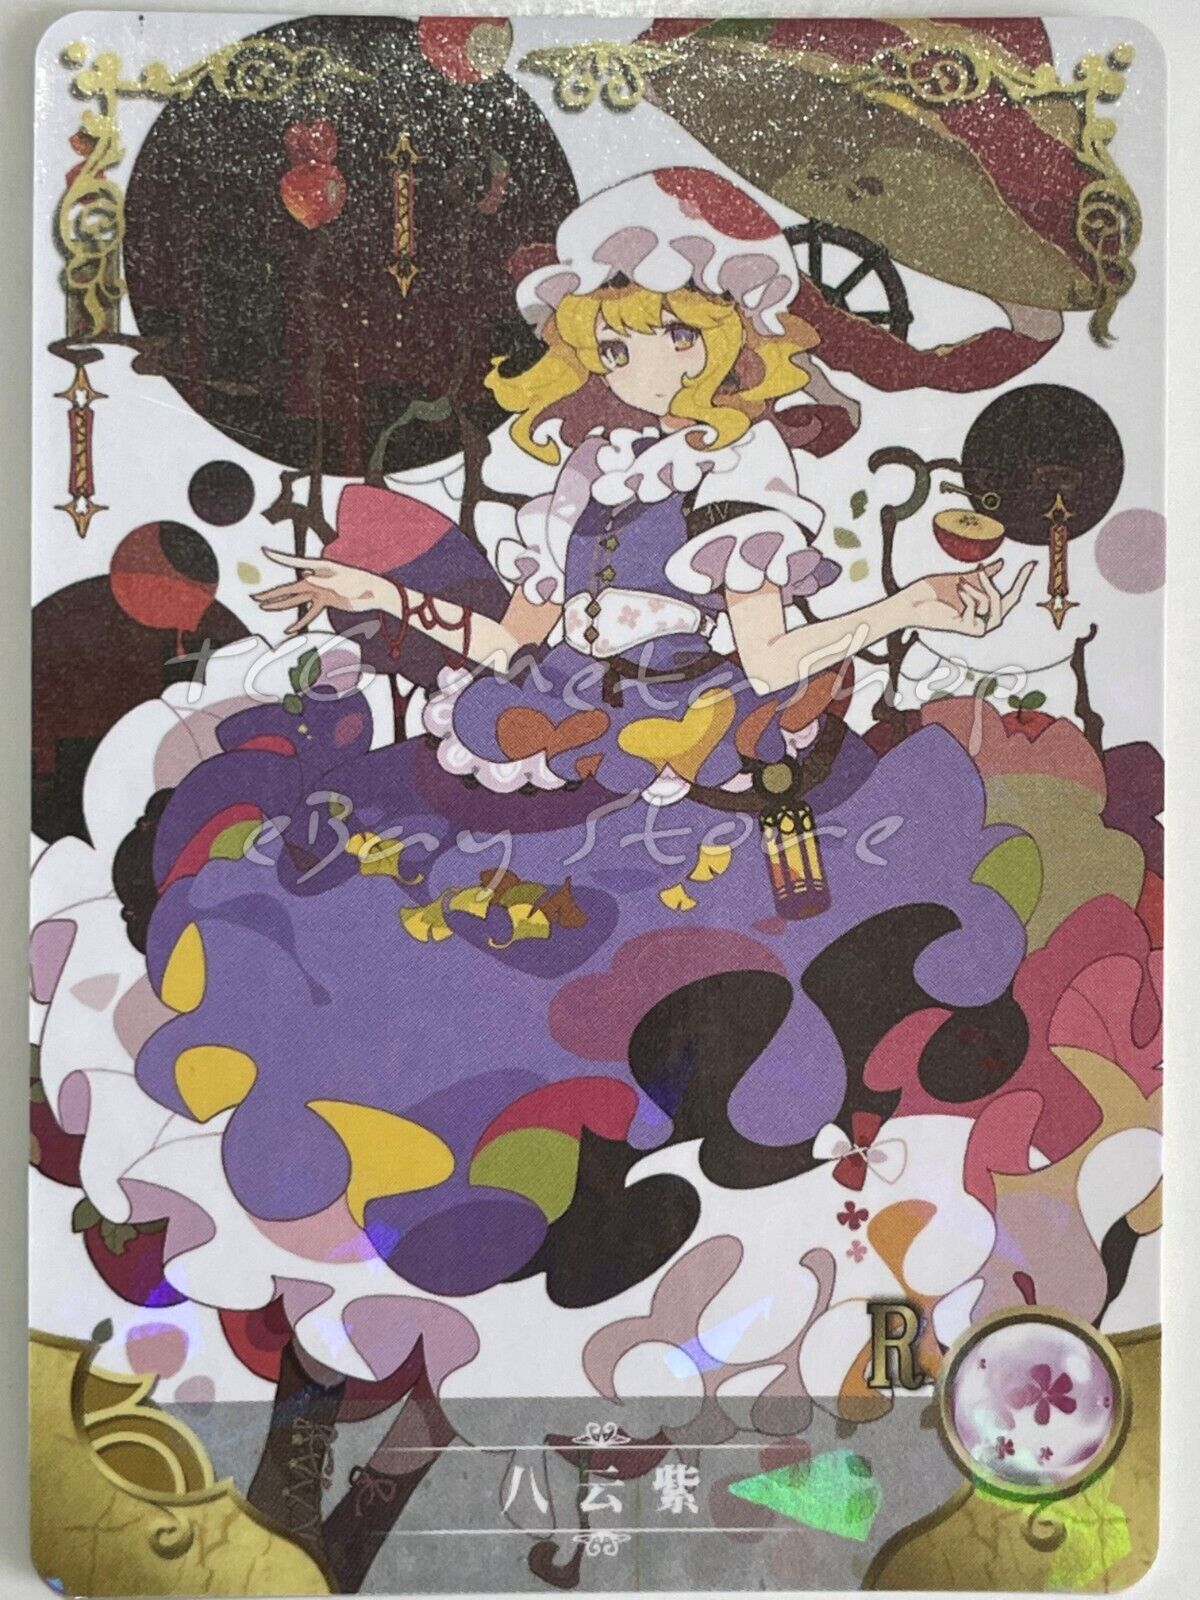 🔥 NS 02 [Pick Your Singles R] Goddess Story Waifu Anime Cards 🔥